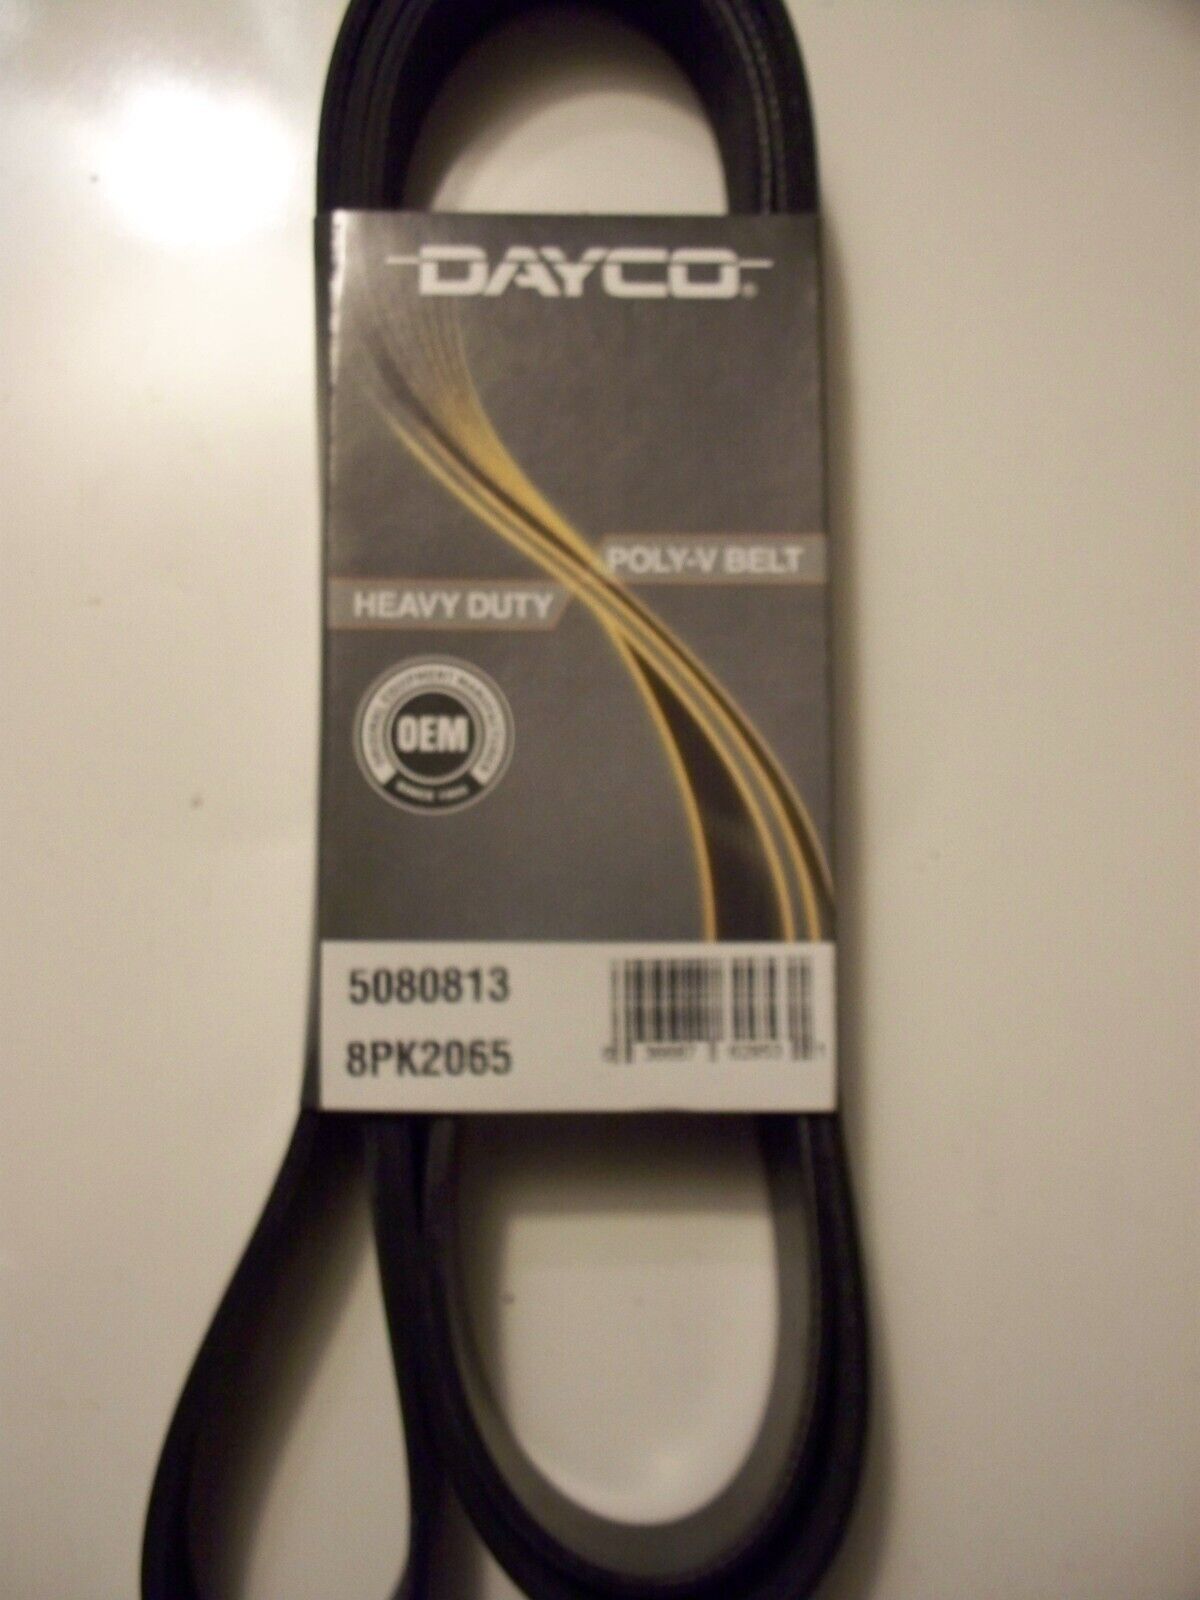 Dayco Poly Rib Gold Label 5080813 Serpentine Belt